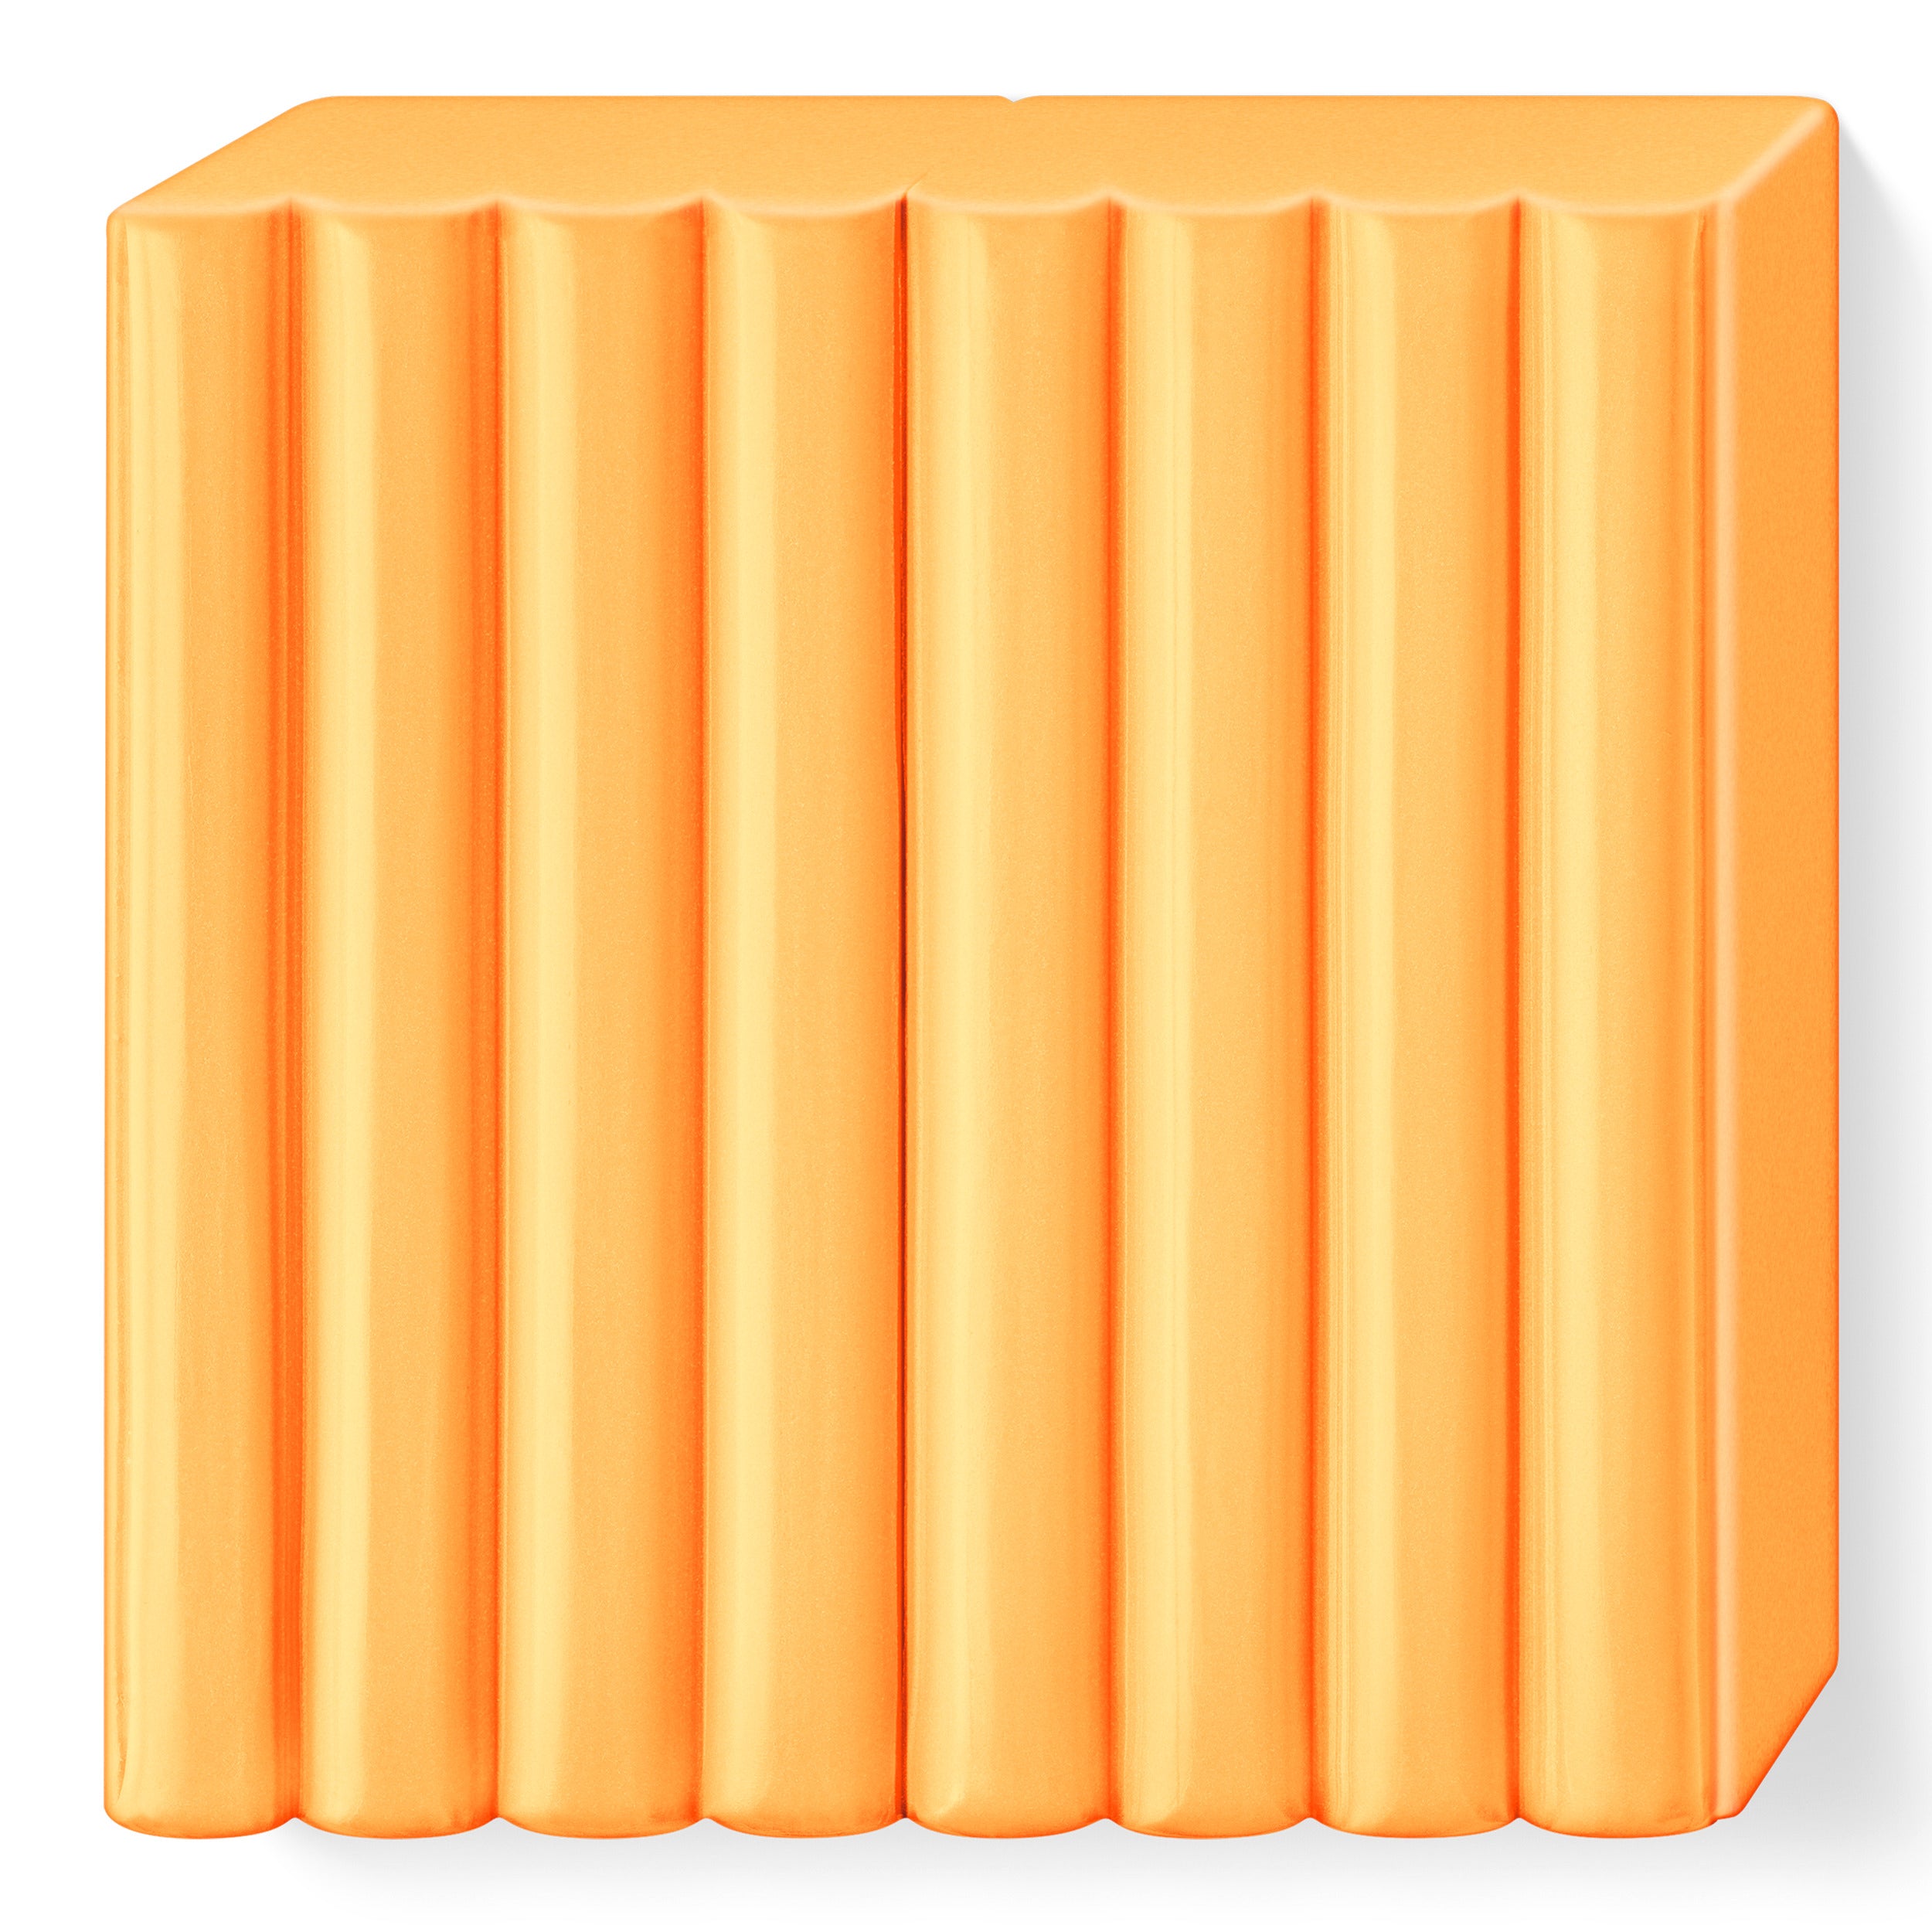 Fimo Effect Polymer Clay Standard Block 57g (2oz) - Neon Orange